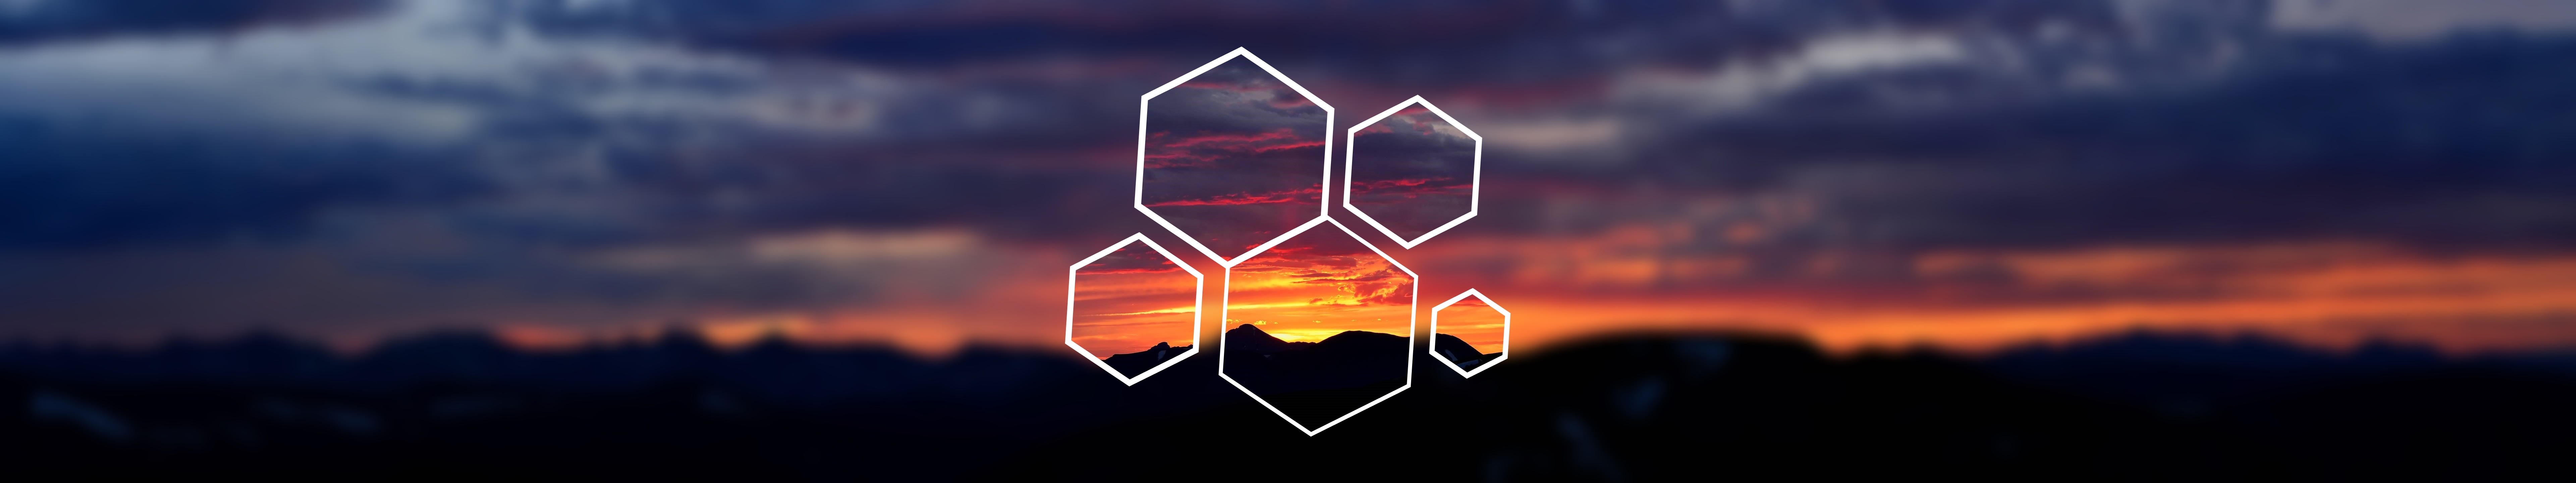 General 7680x1440 ultrawide hexagon sunset blurred sky sunlight digital art nature geometric figures polyscape